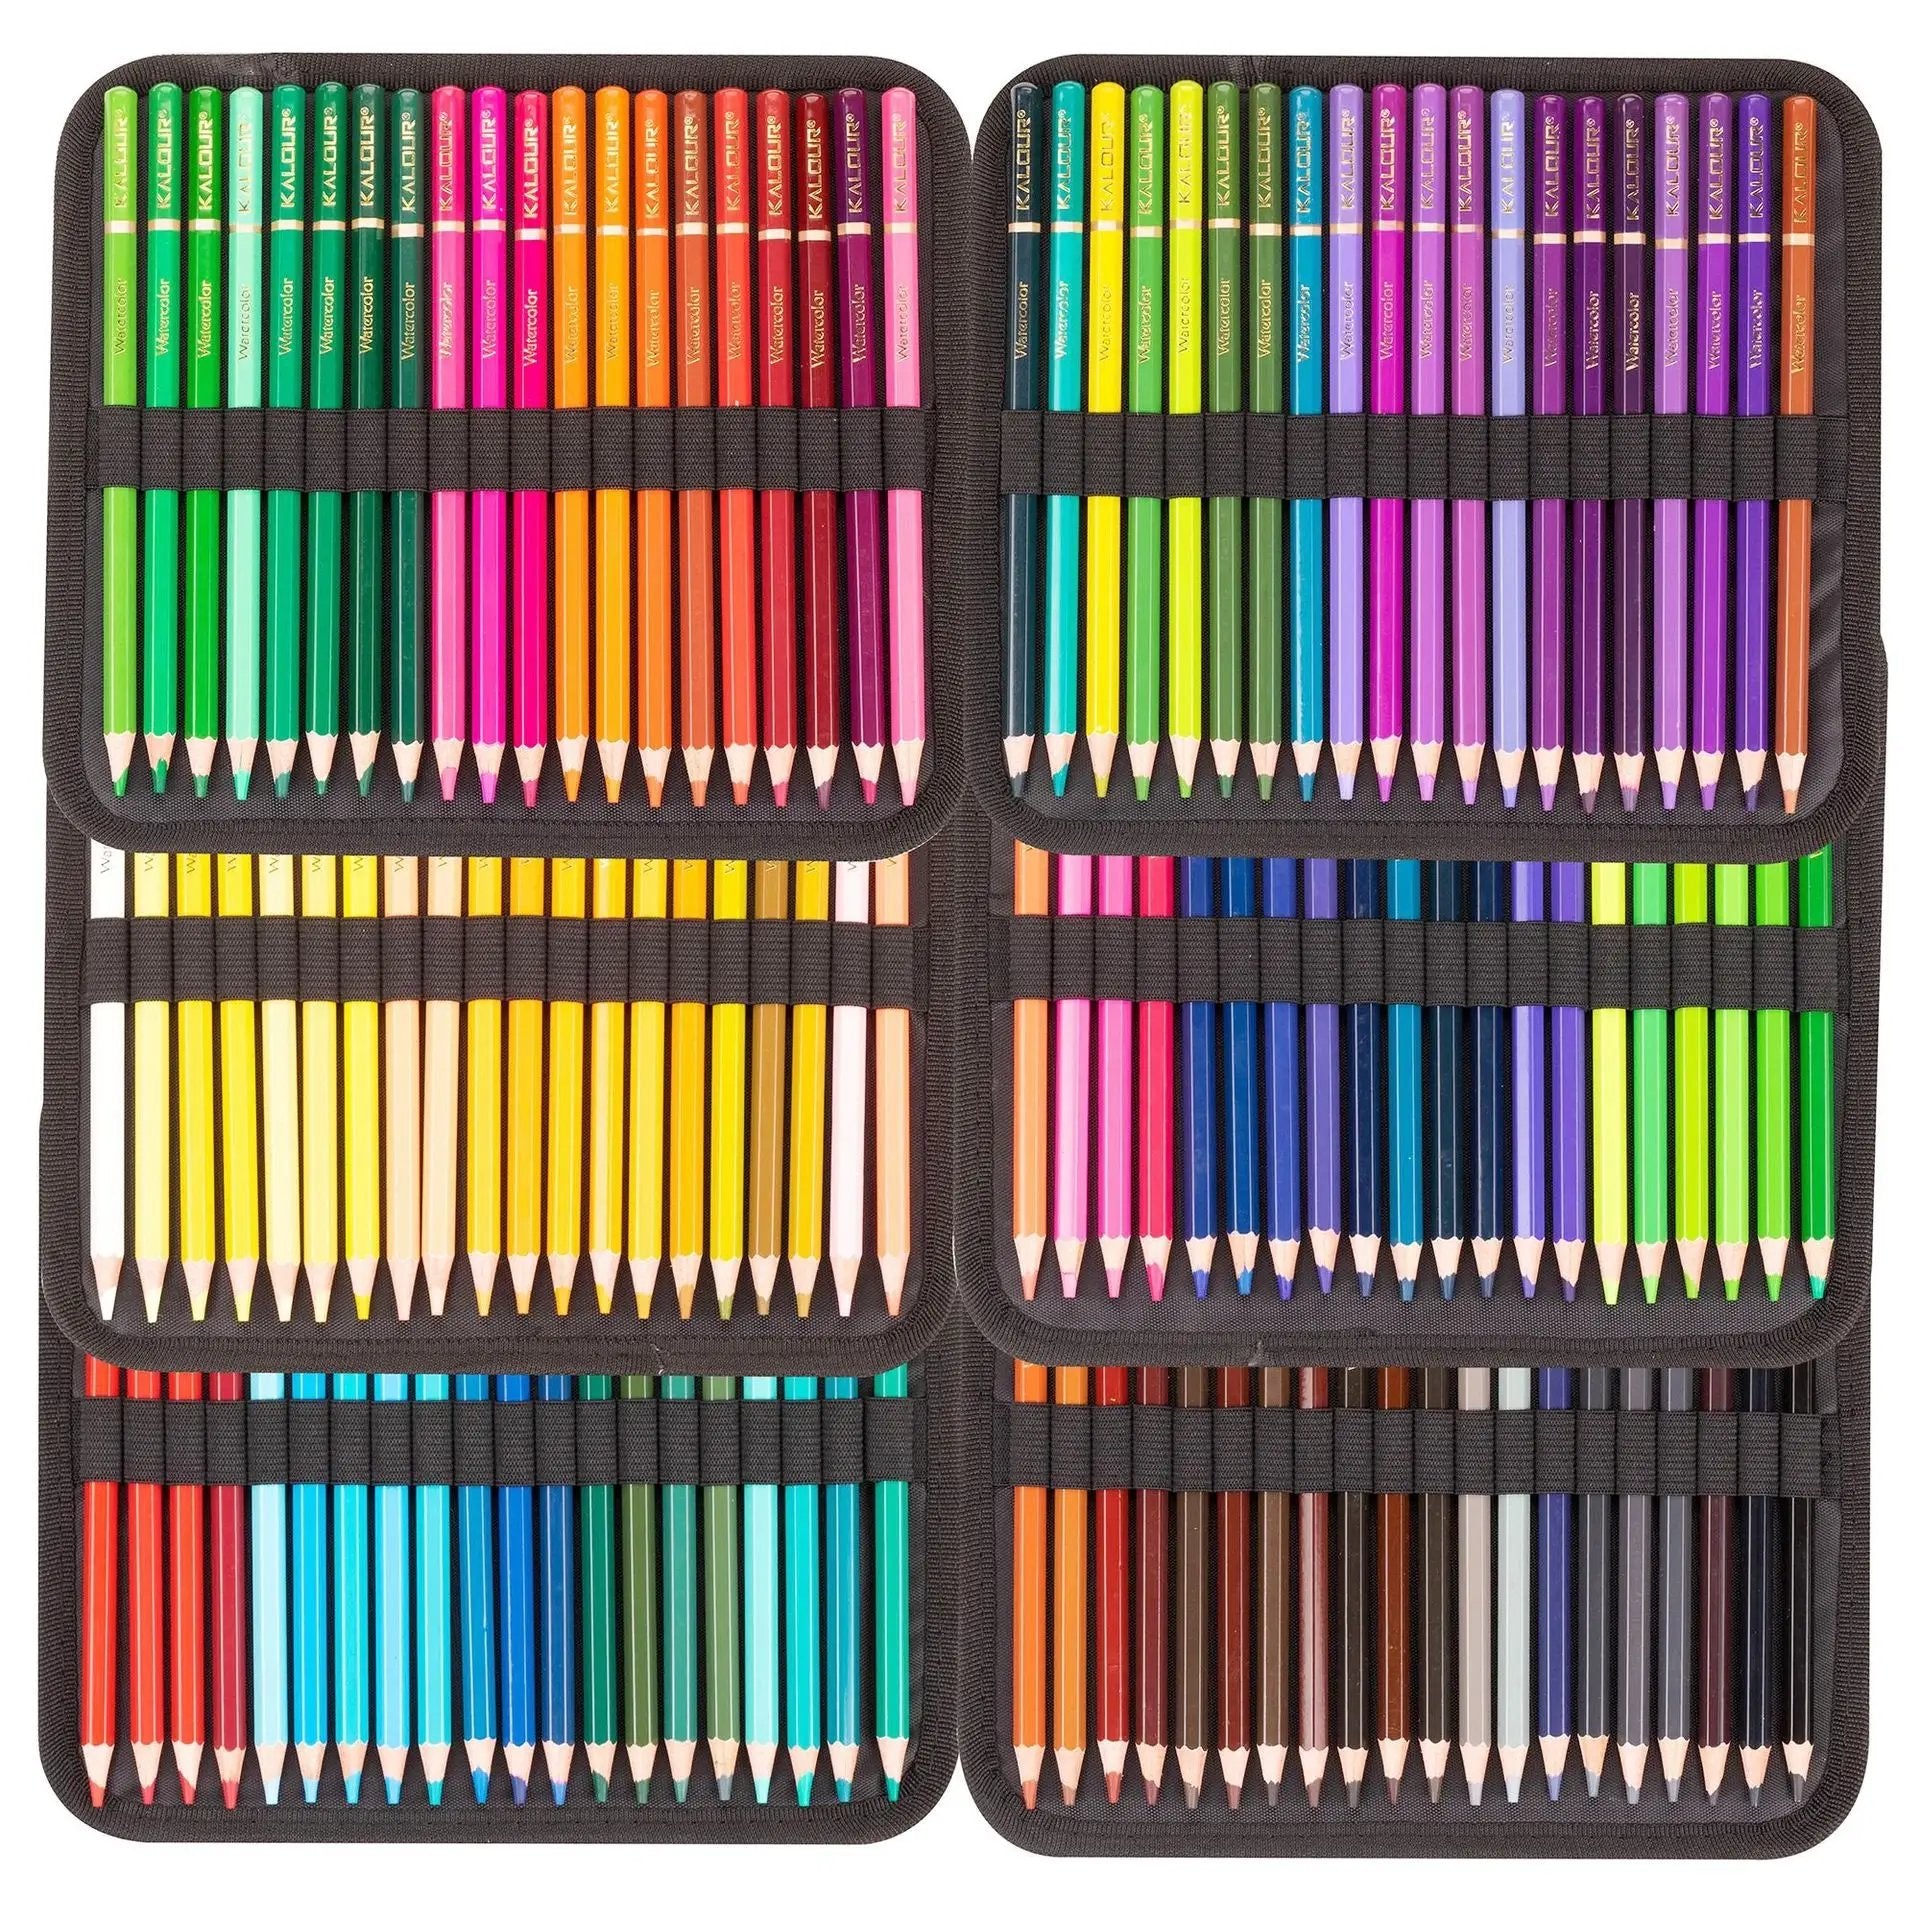 KALOUR 120 Watercolor Pencils Set with Carrying Case